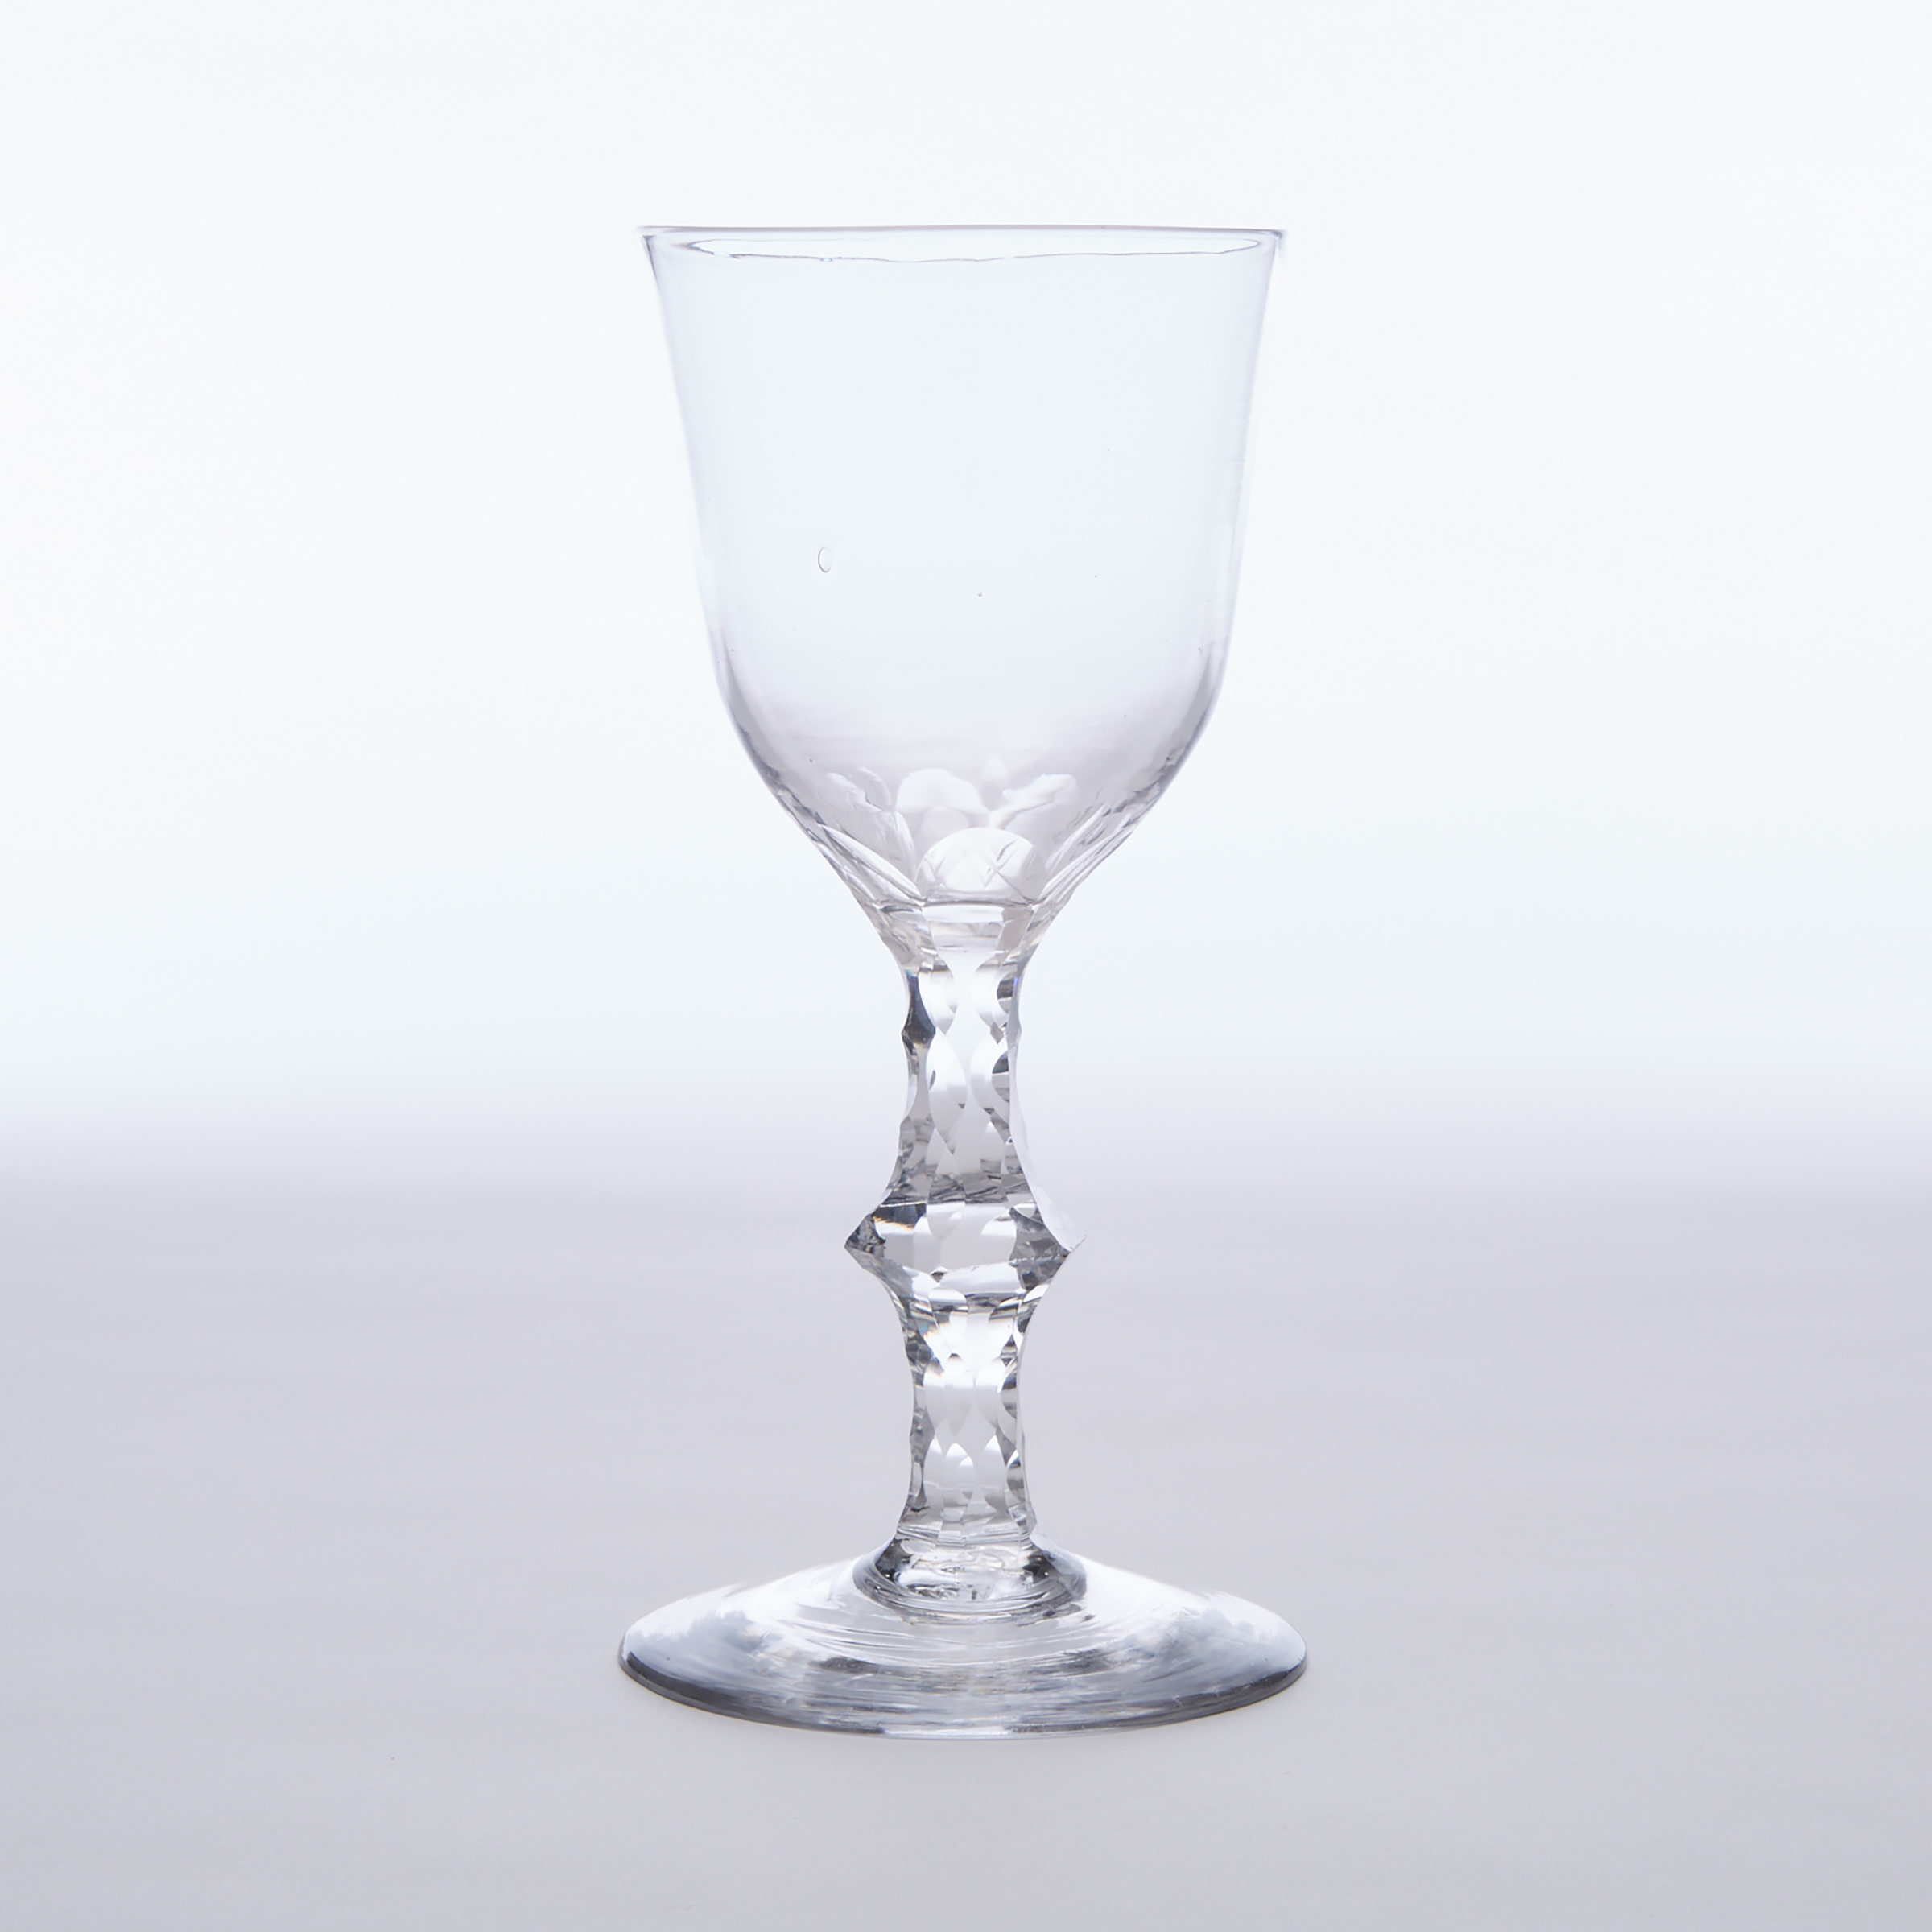 English Faceted Stemmed Glass Goblet, c.1770-90